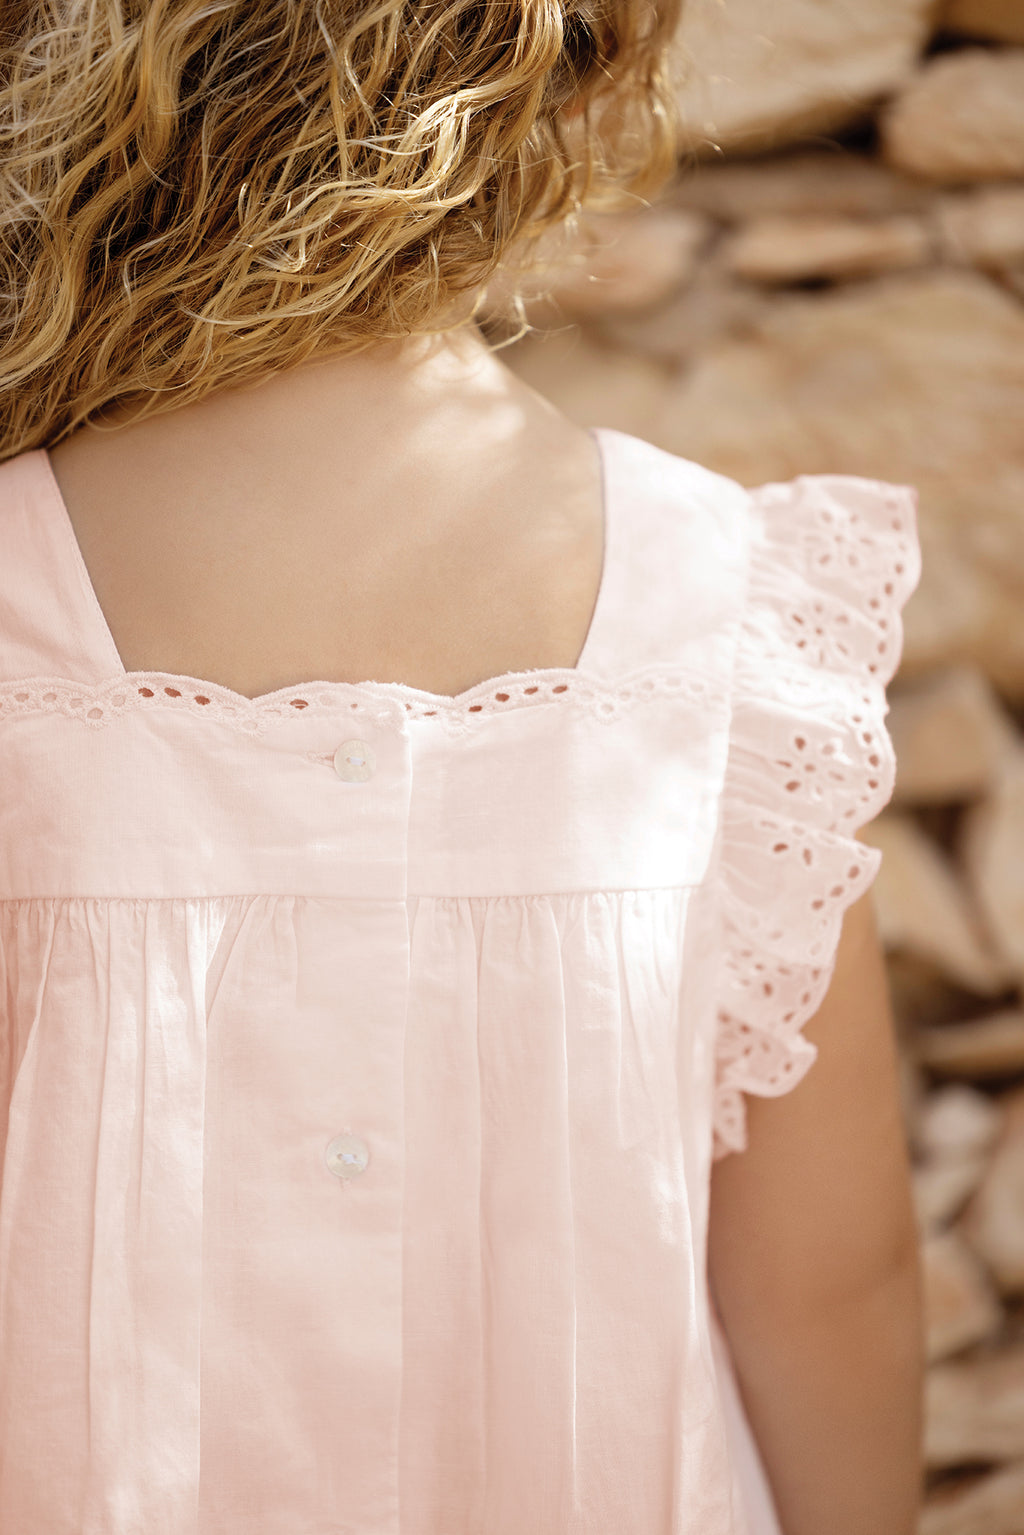 Dress - Pale pink English embroidery